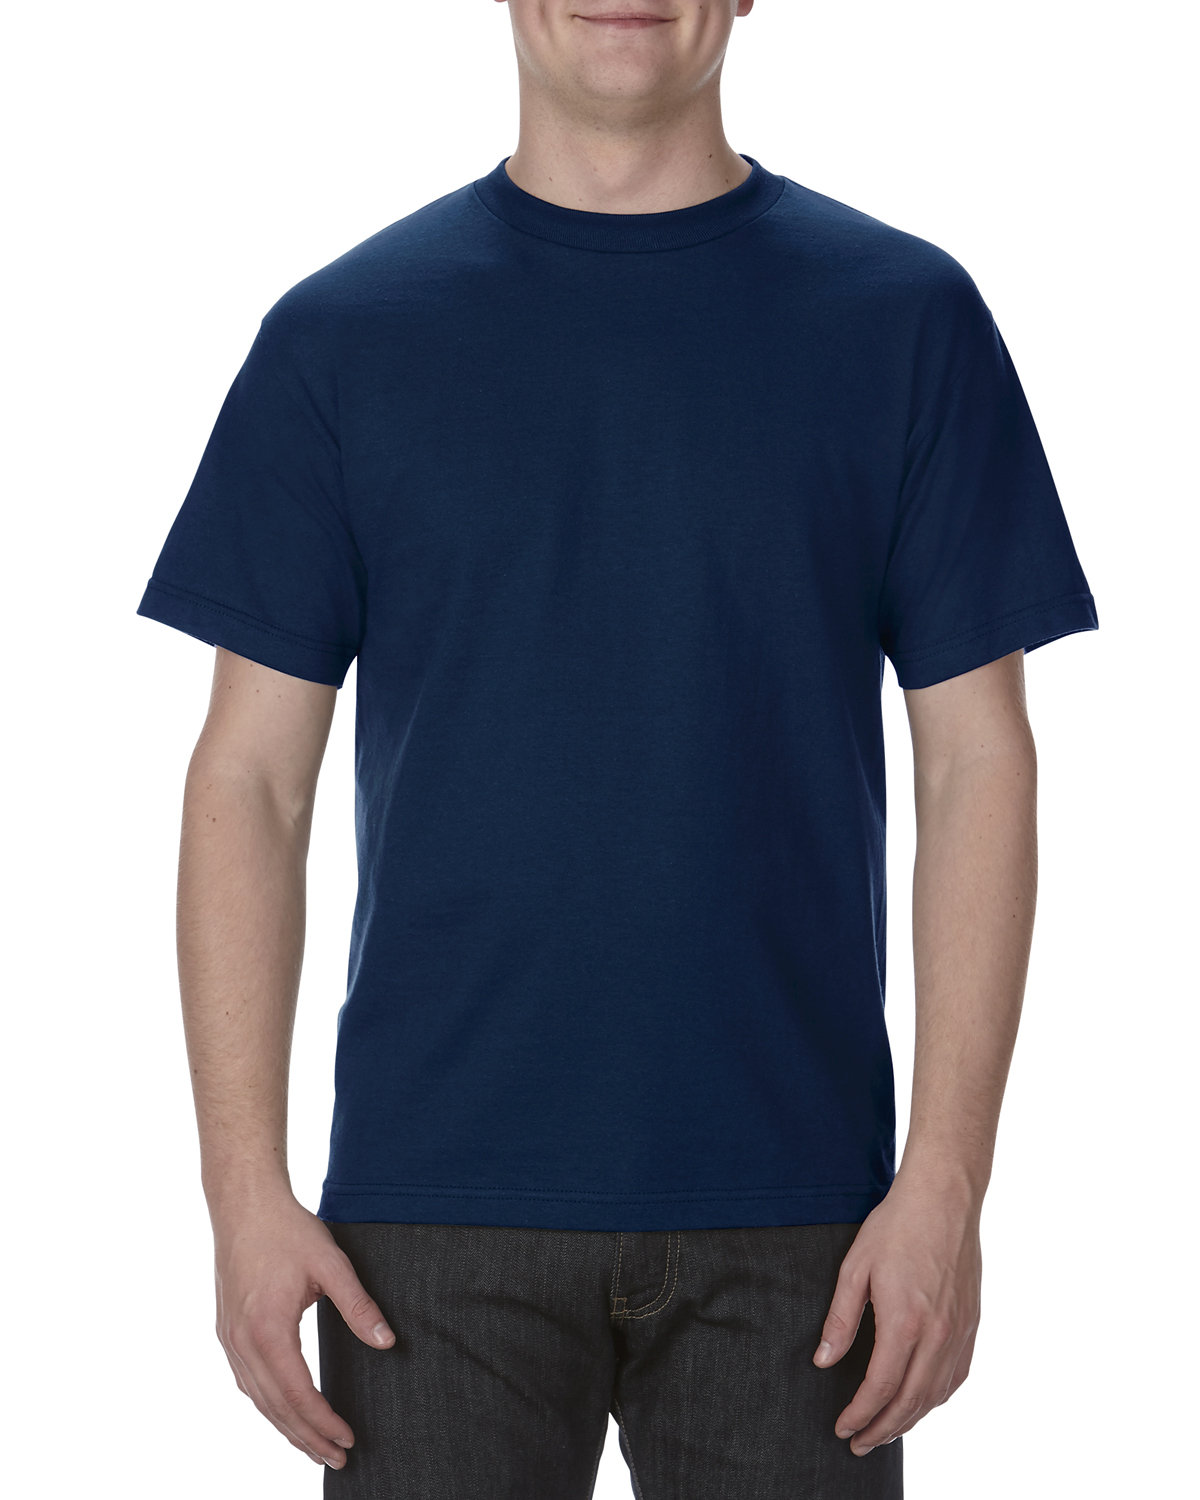 American Apparel Unisex Heavyweight Cotton T-Shirt true navy 